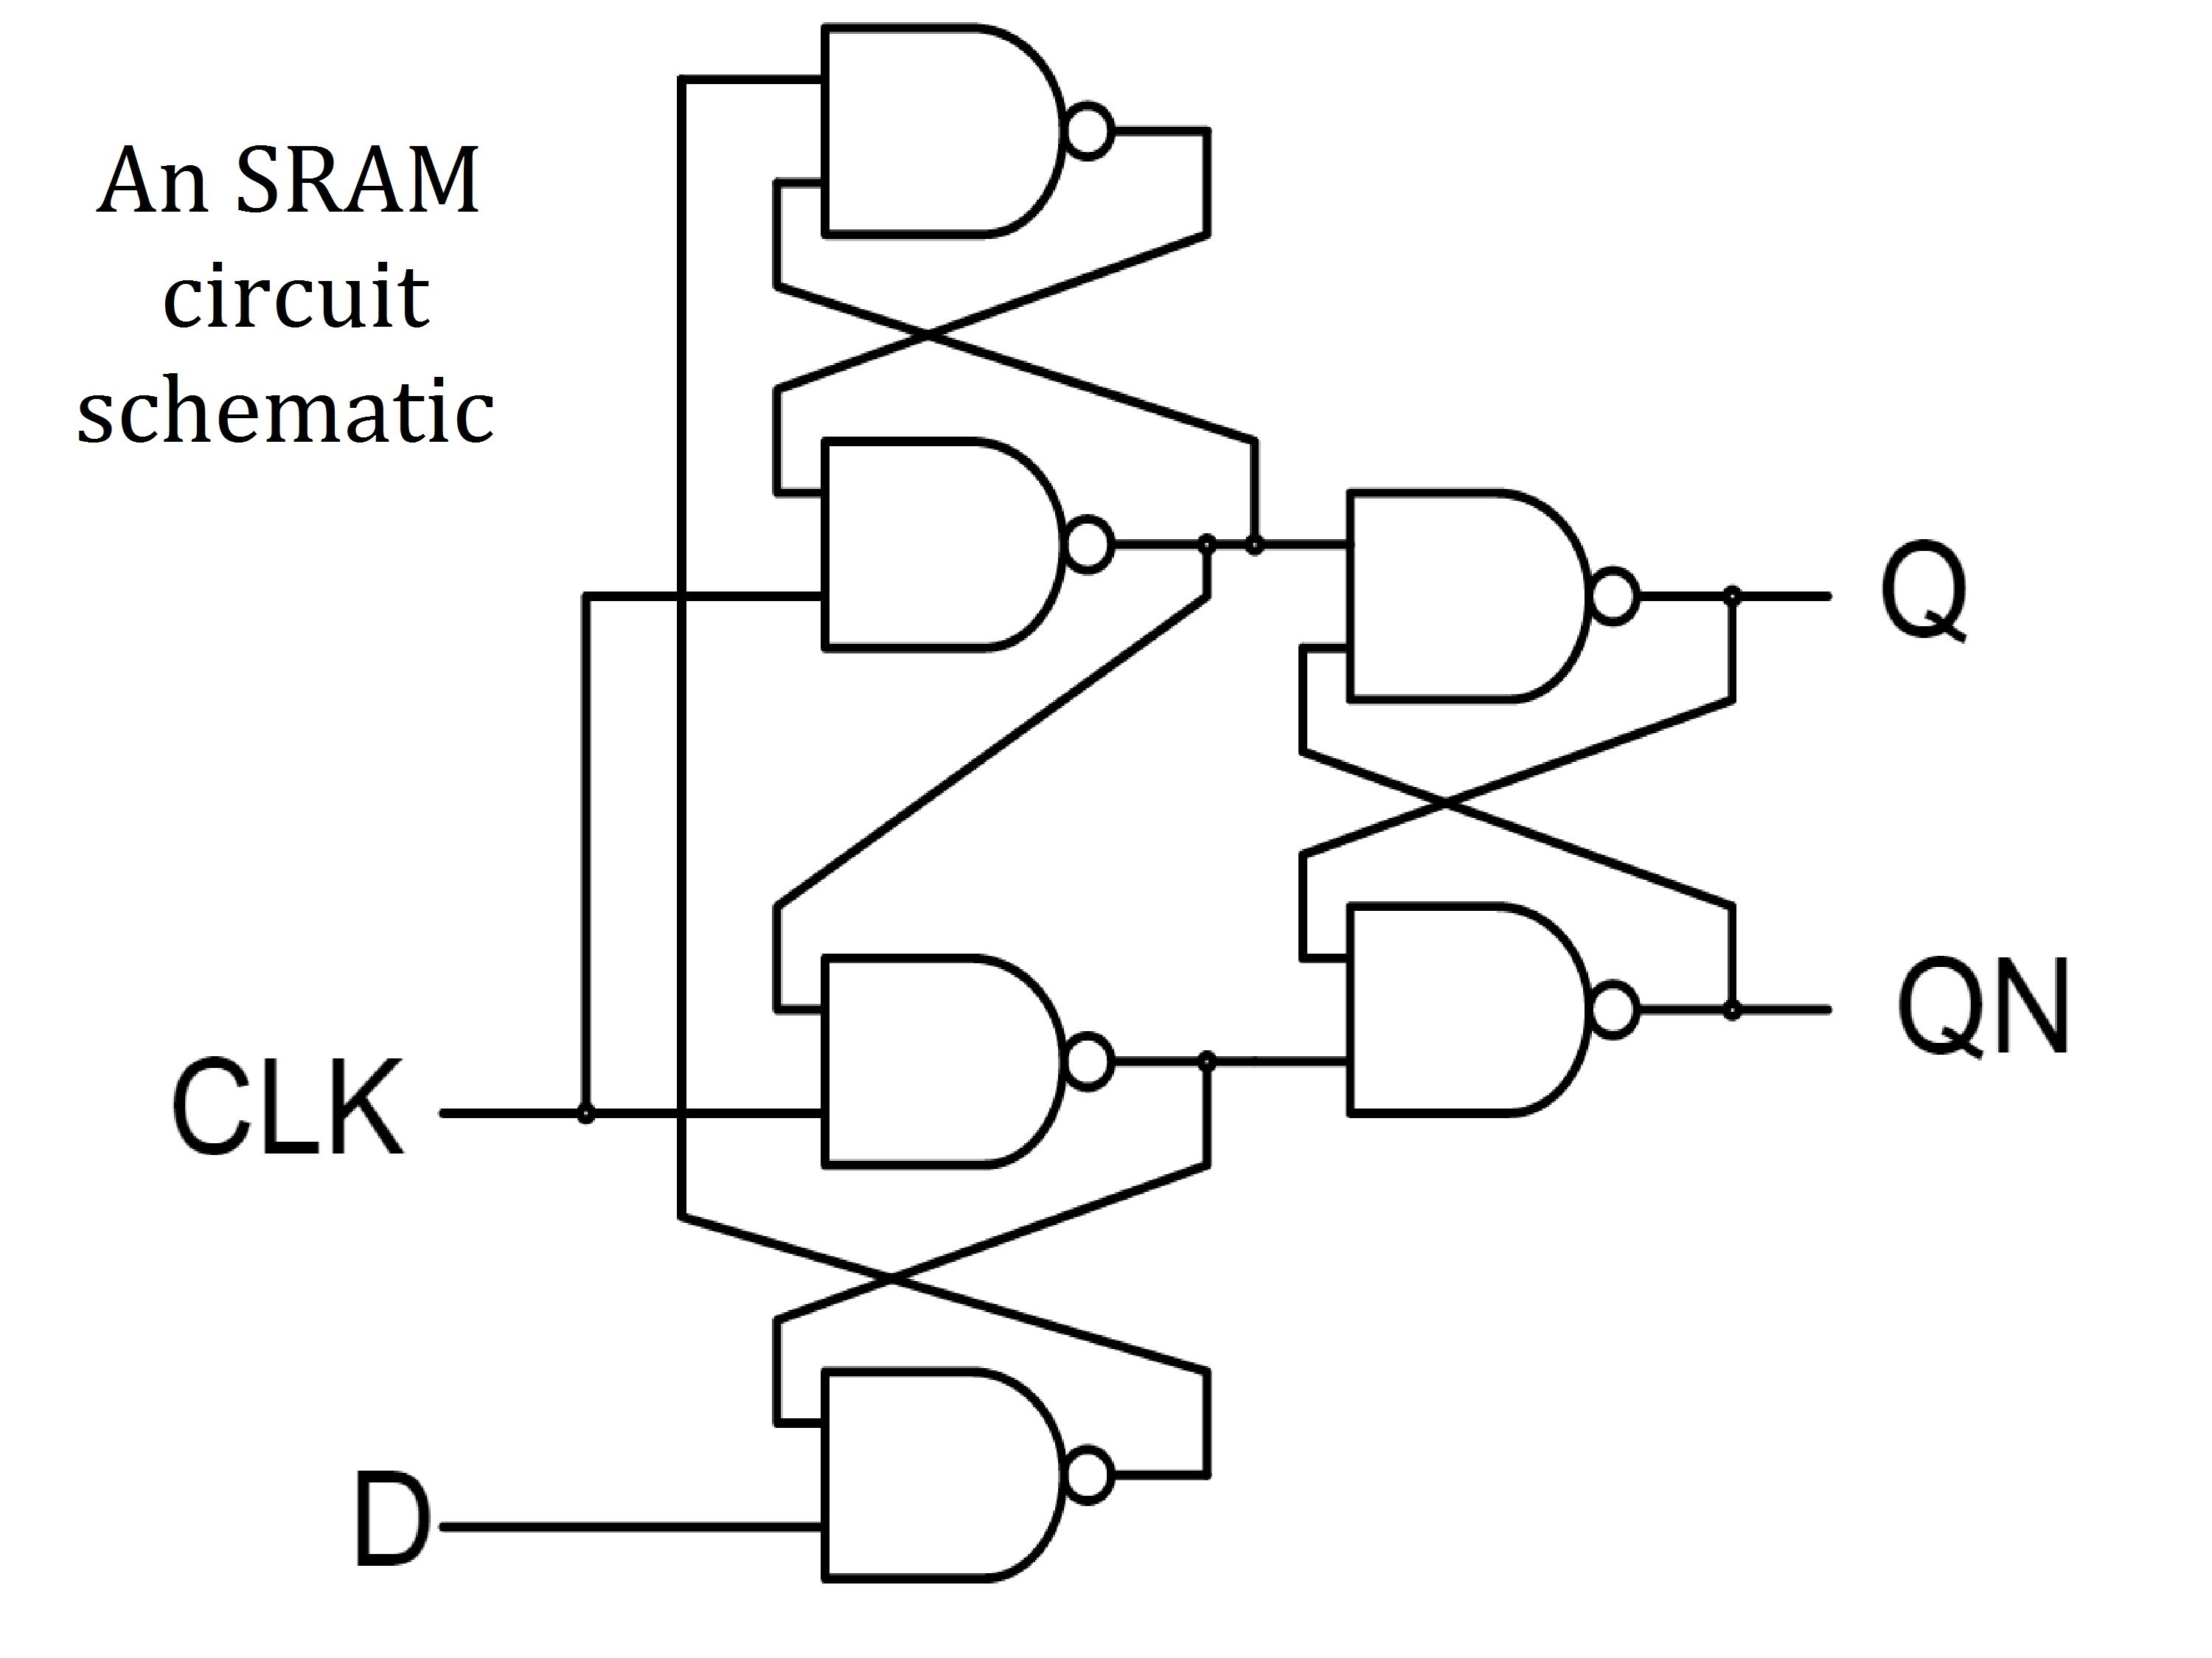 Basic schematic of static RAM